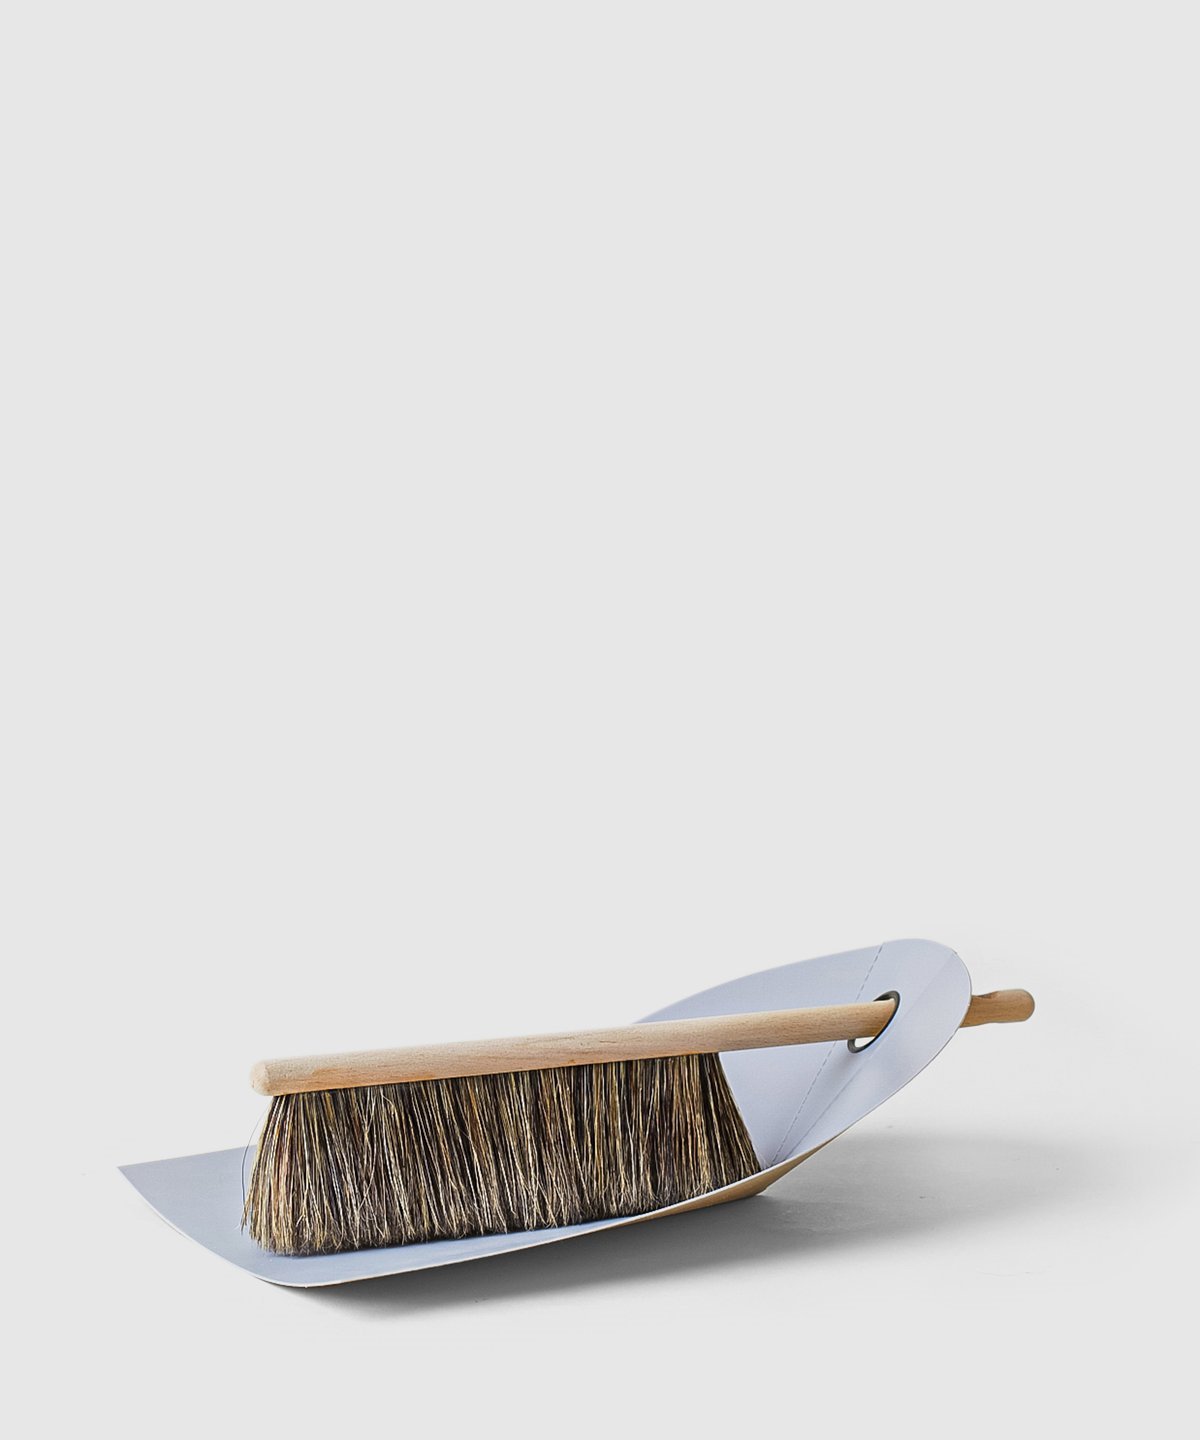 Cepillo recogedor de madera de la nueva tienda de Marie Kondo Kon Mari